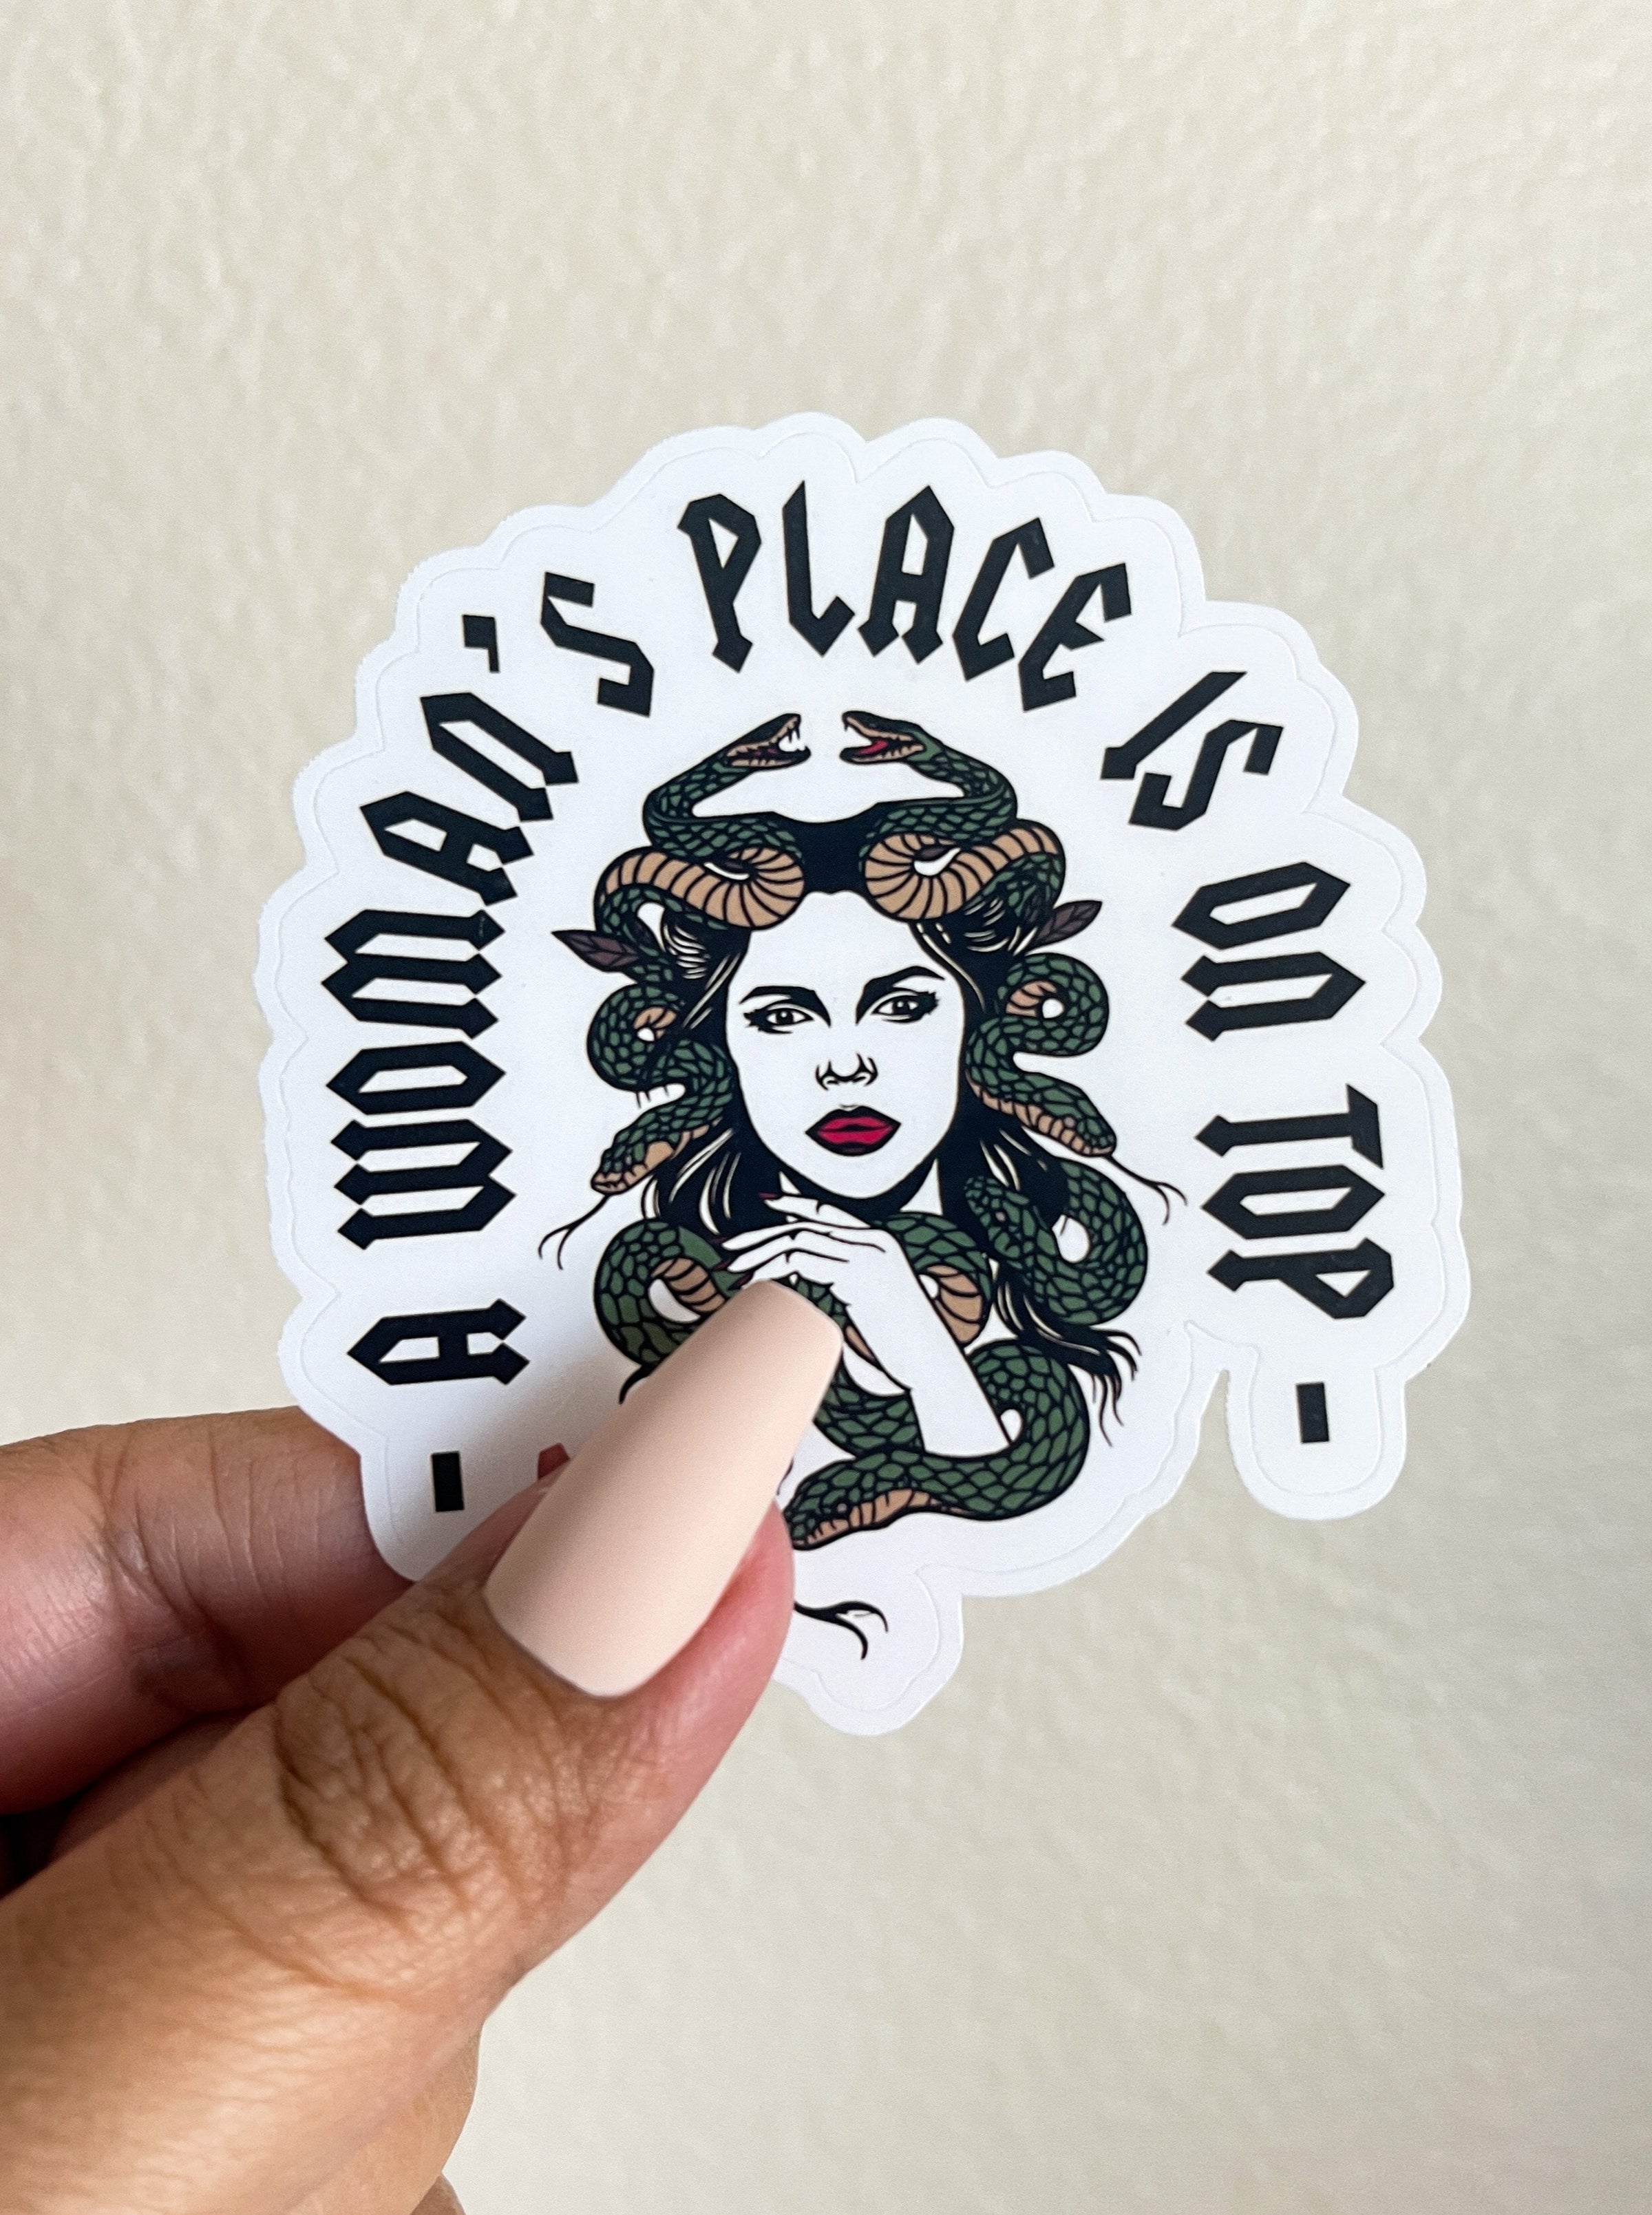 A Woman's Place is On Top || Waterproof Sticker